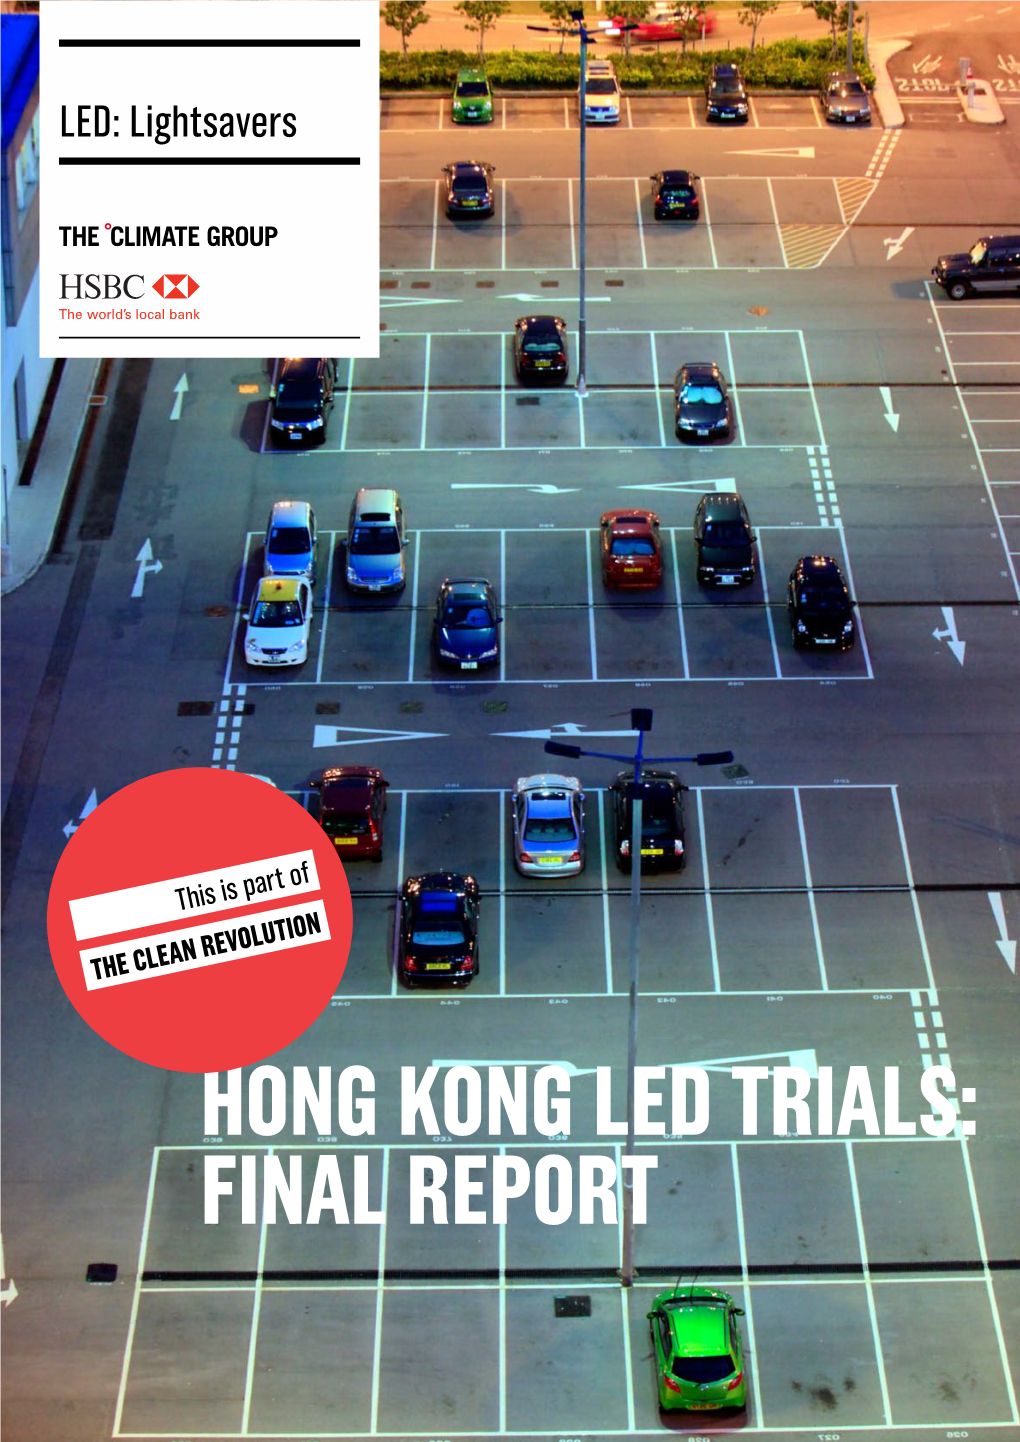 Hong Kong LED Trials: Final Report LED: Lightsavers